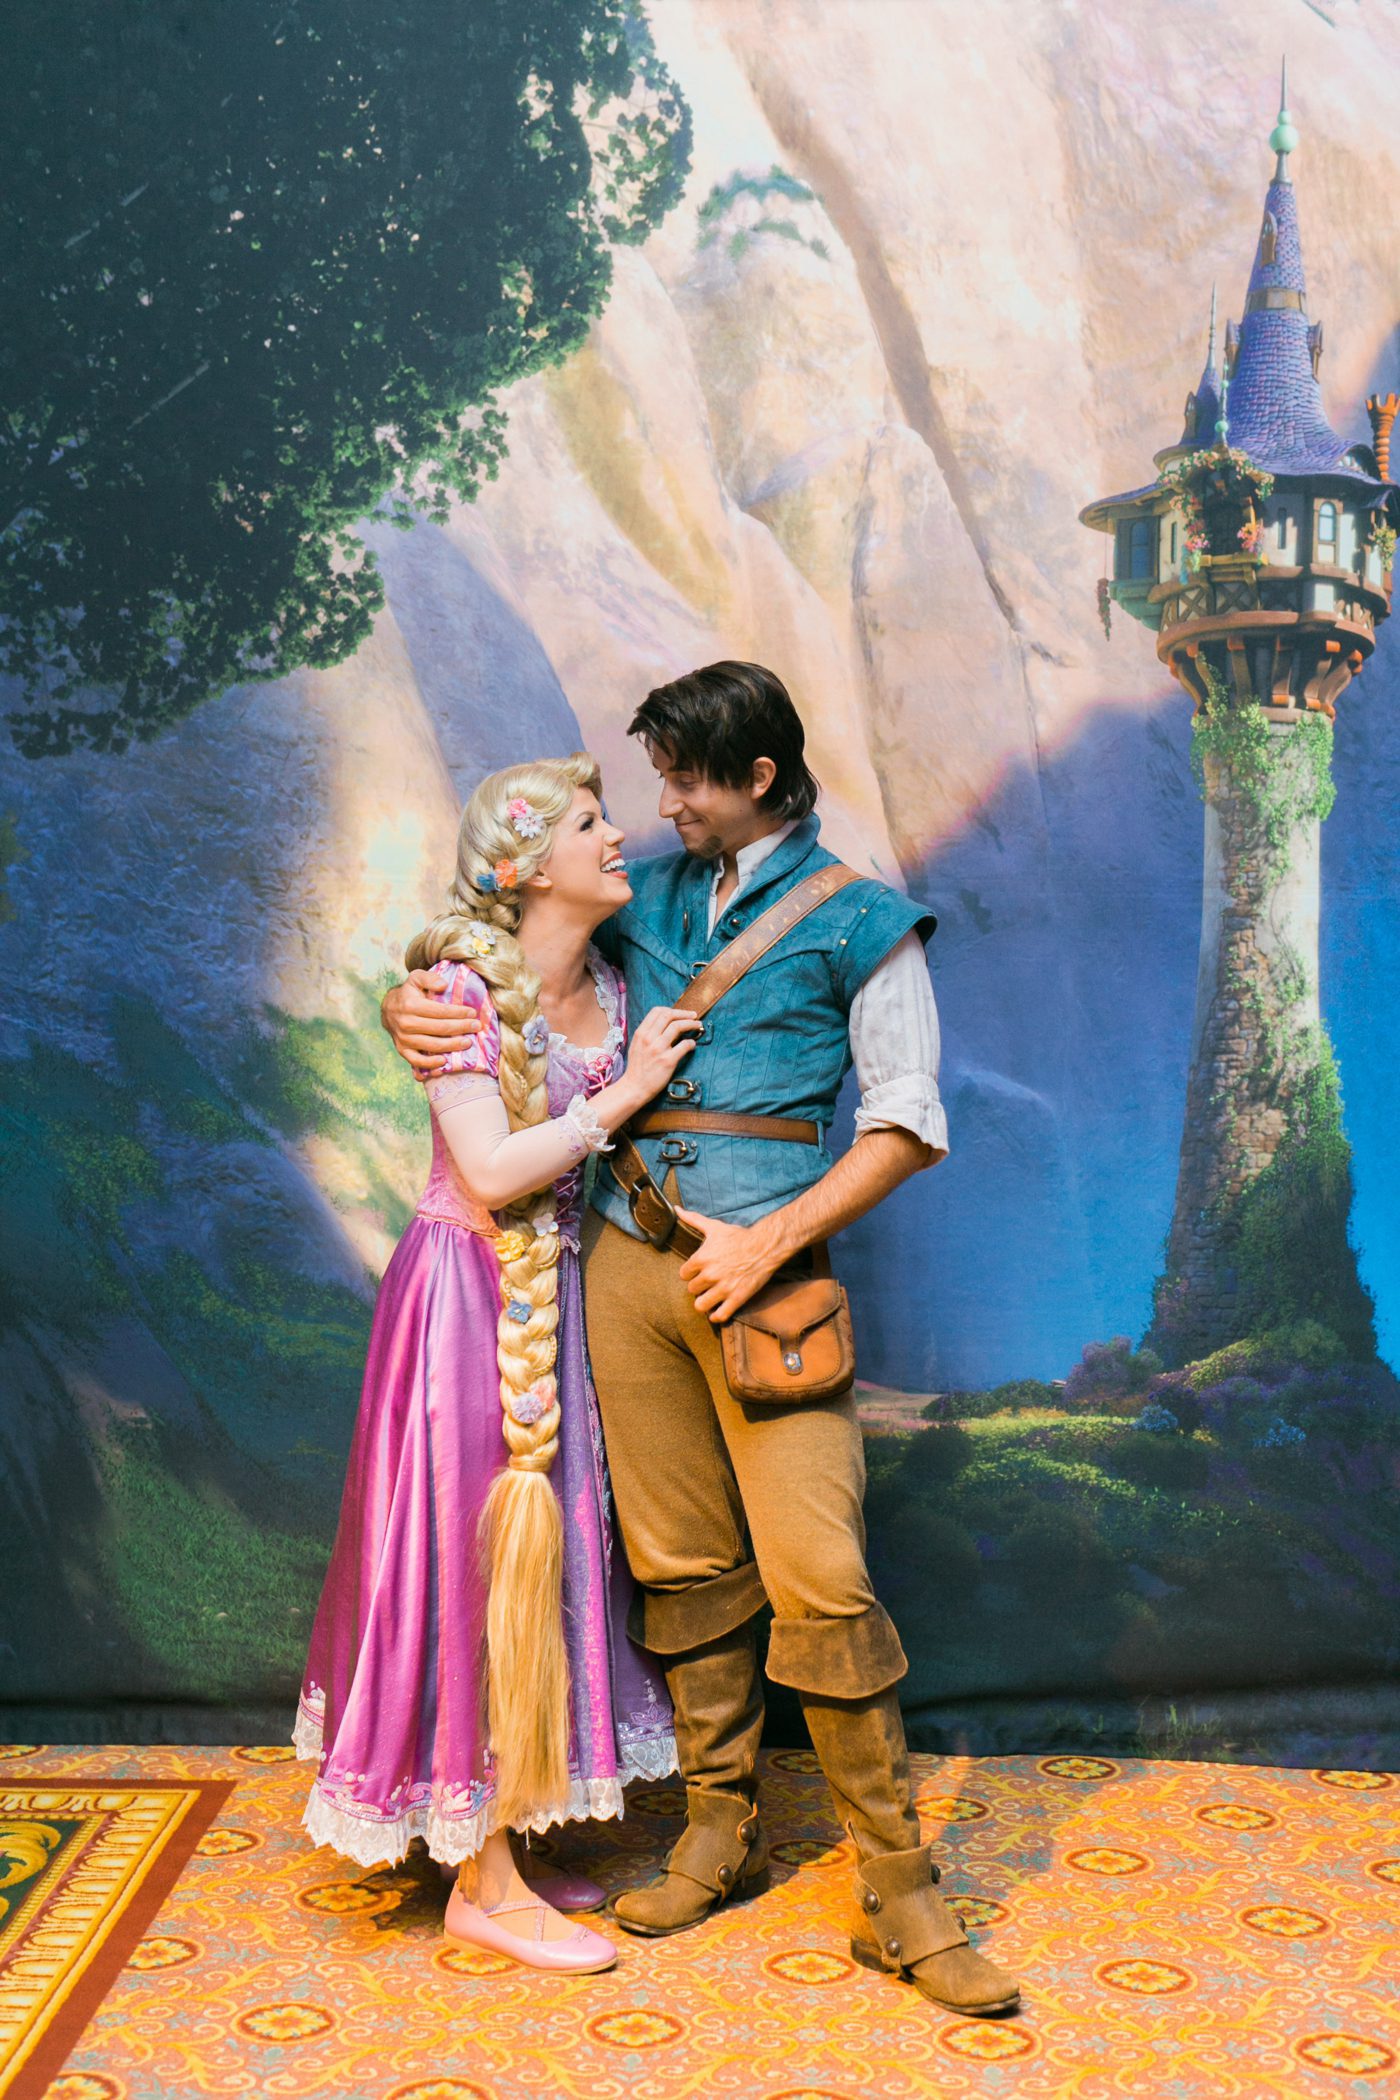 Rapunzel and Flynn Rider face characters attending a Disney World wedding